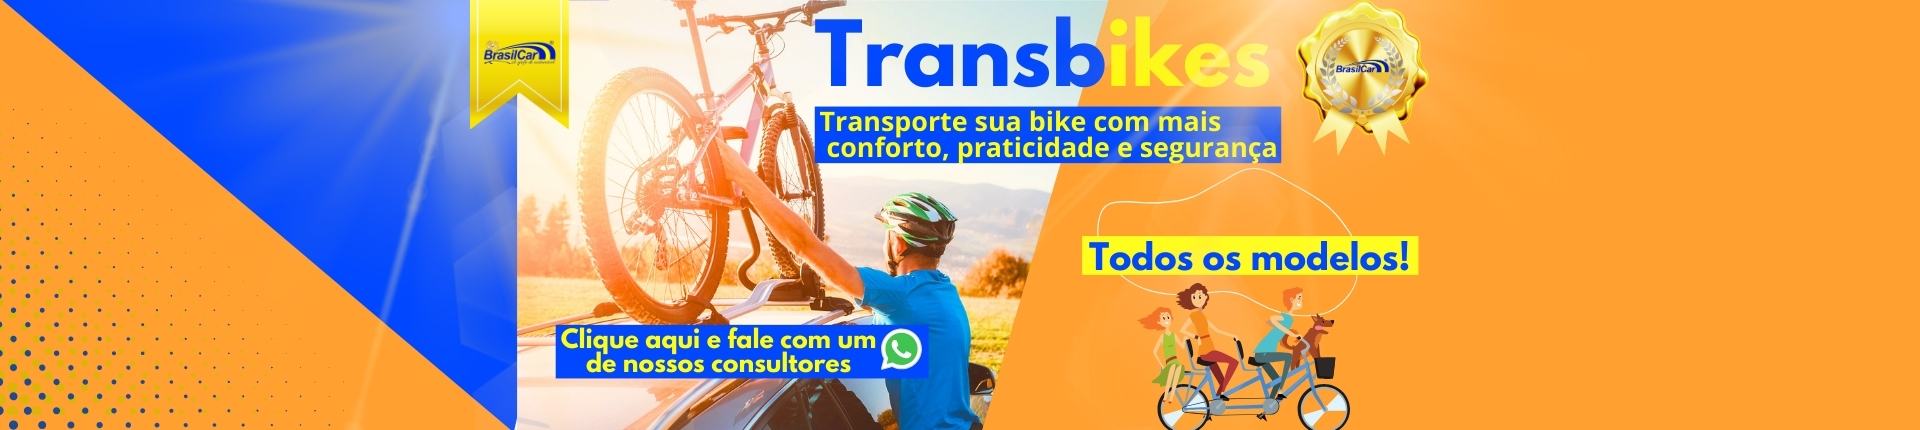 Transbike terciaria